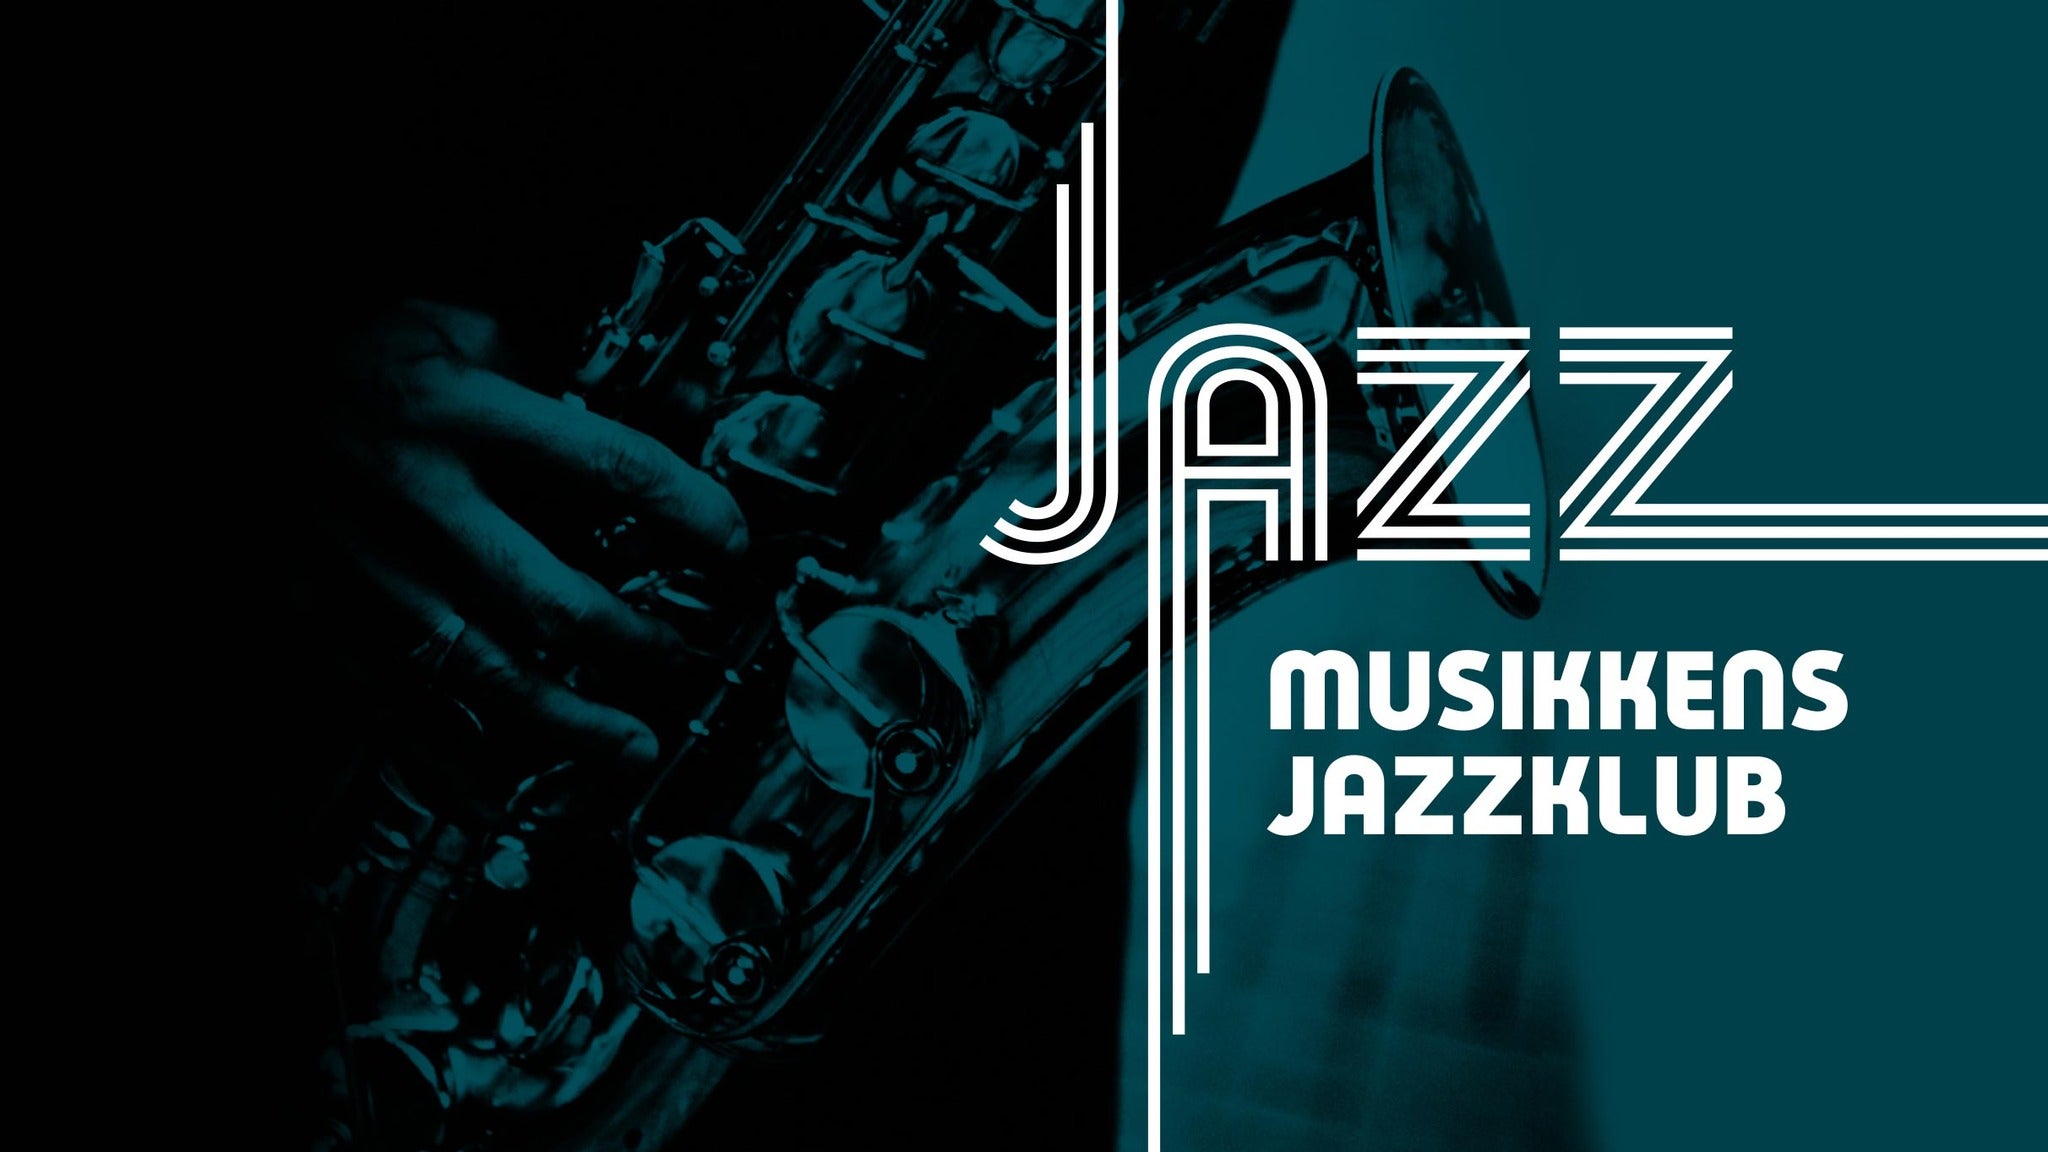 Musikkens Jazzklub presale information on freepresalepasswords.com